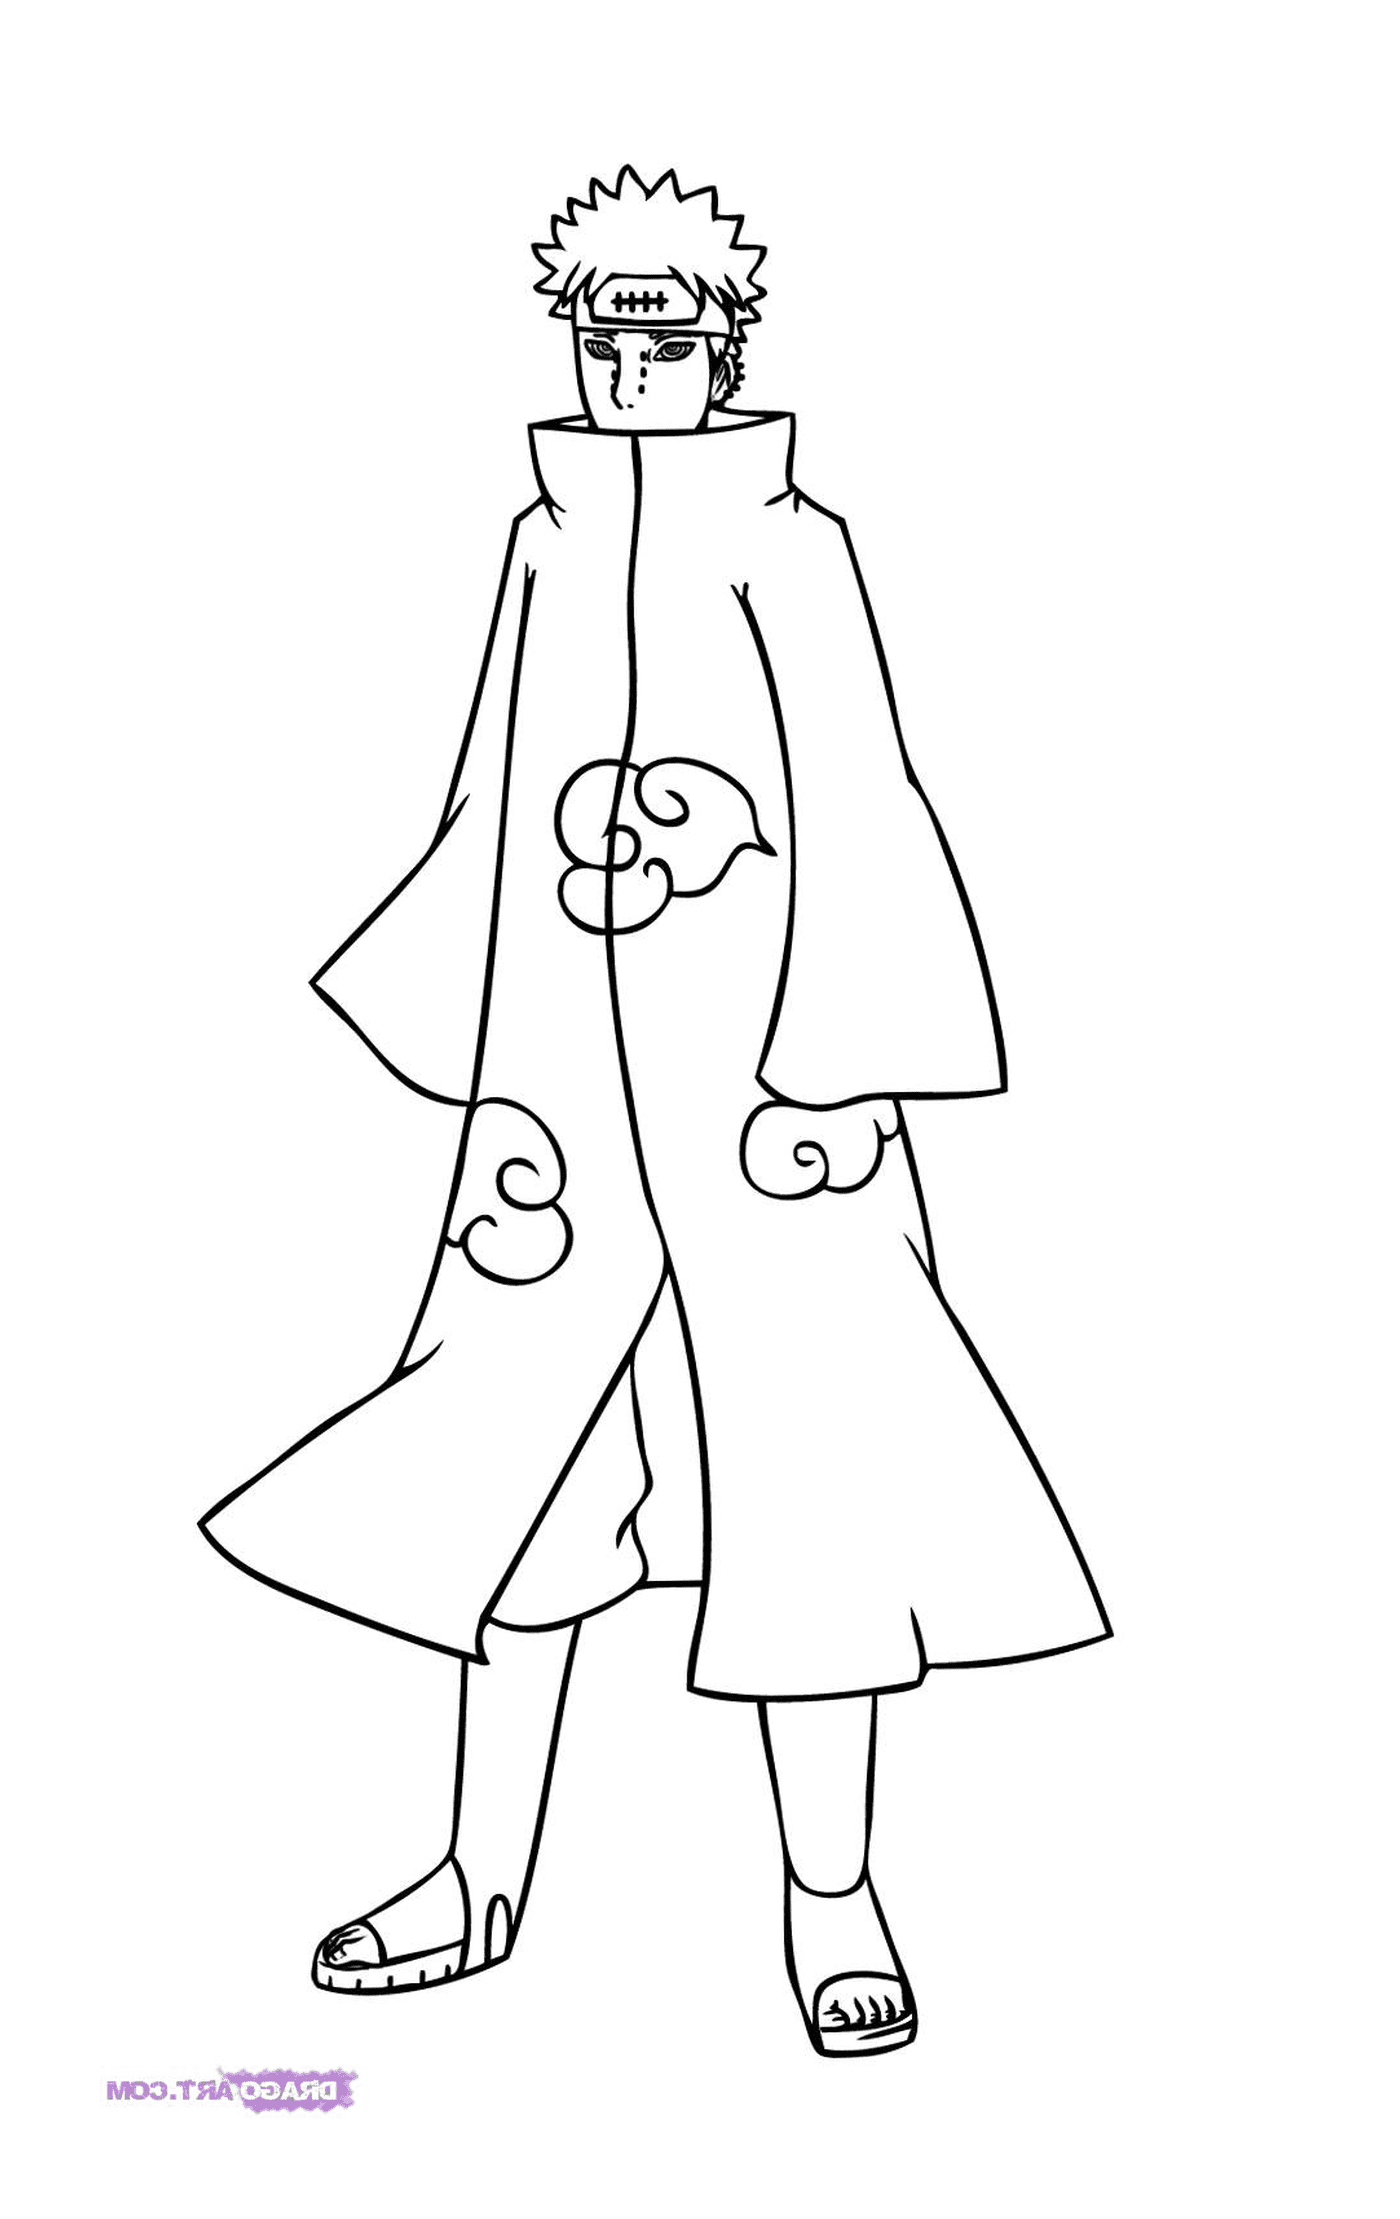  A woman in a long coat 